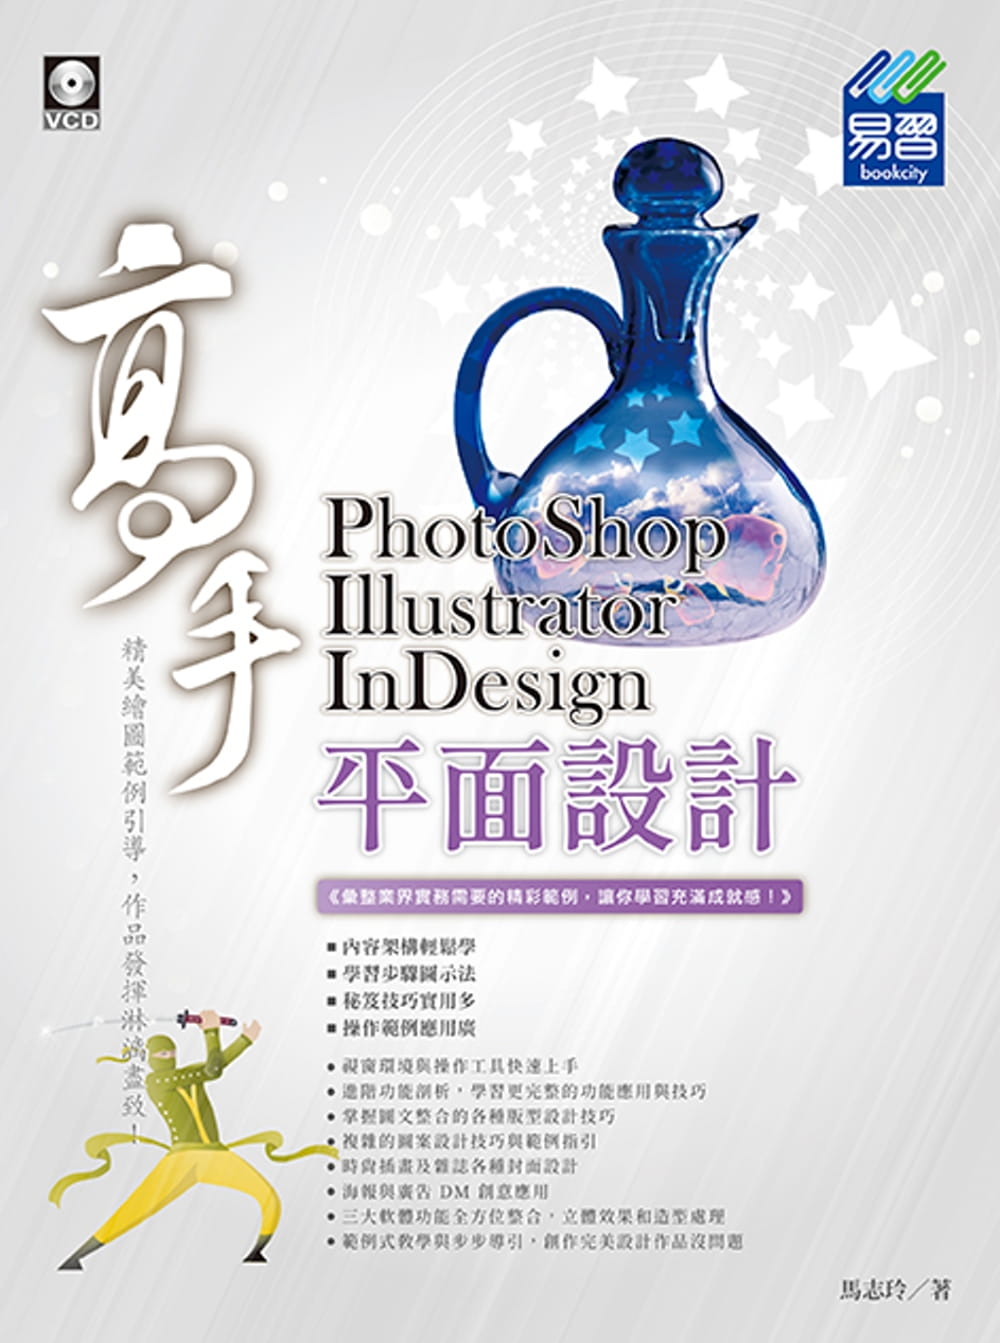 PhotoShop、Illustrator、InDesign